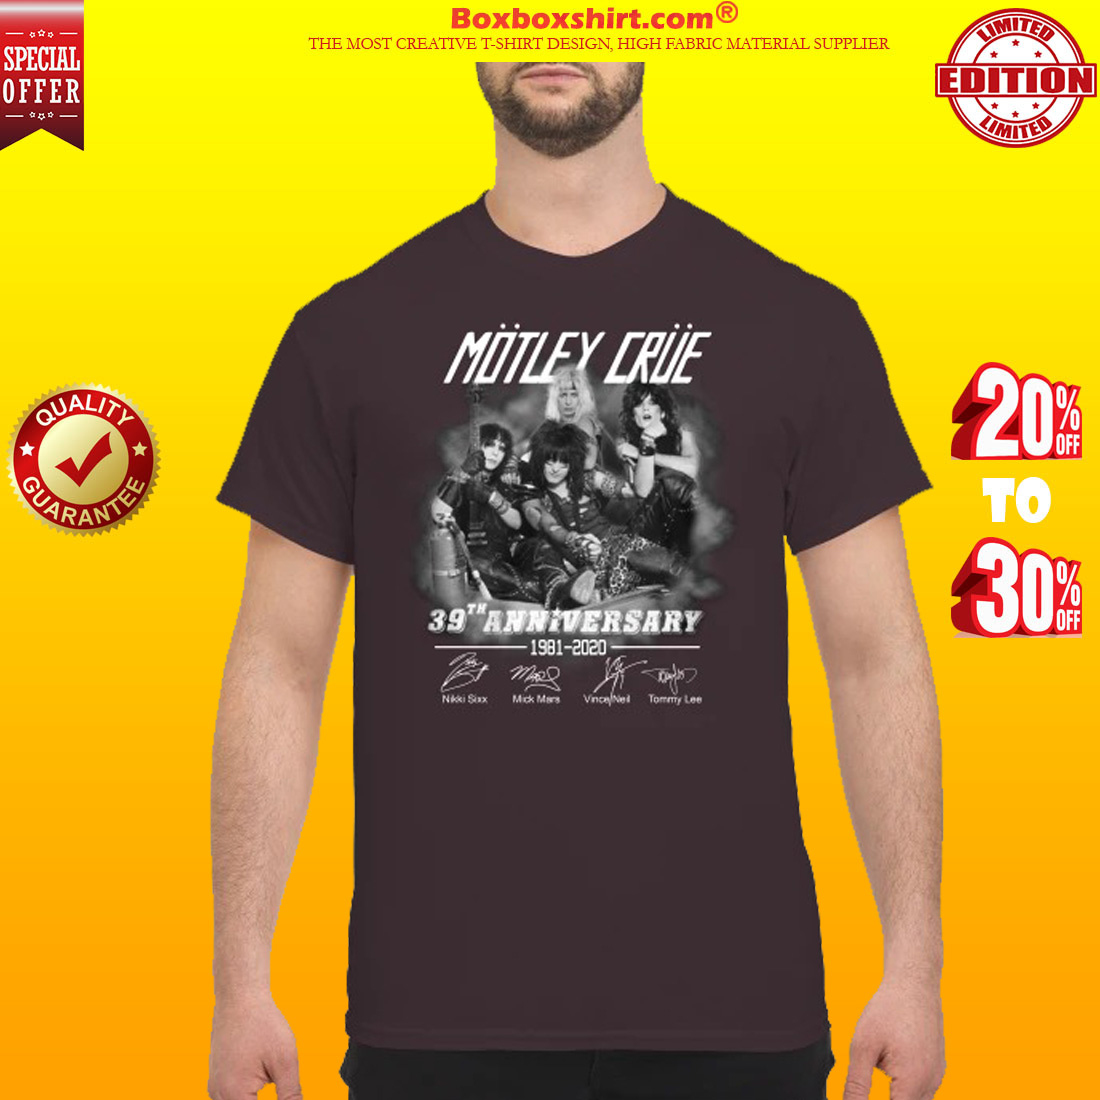 Motley Crue 39th anniversary 1981 2020 shirt